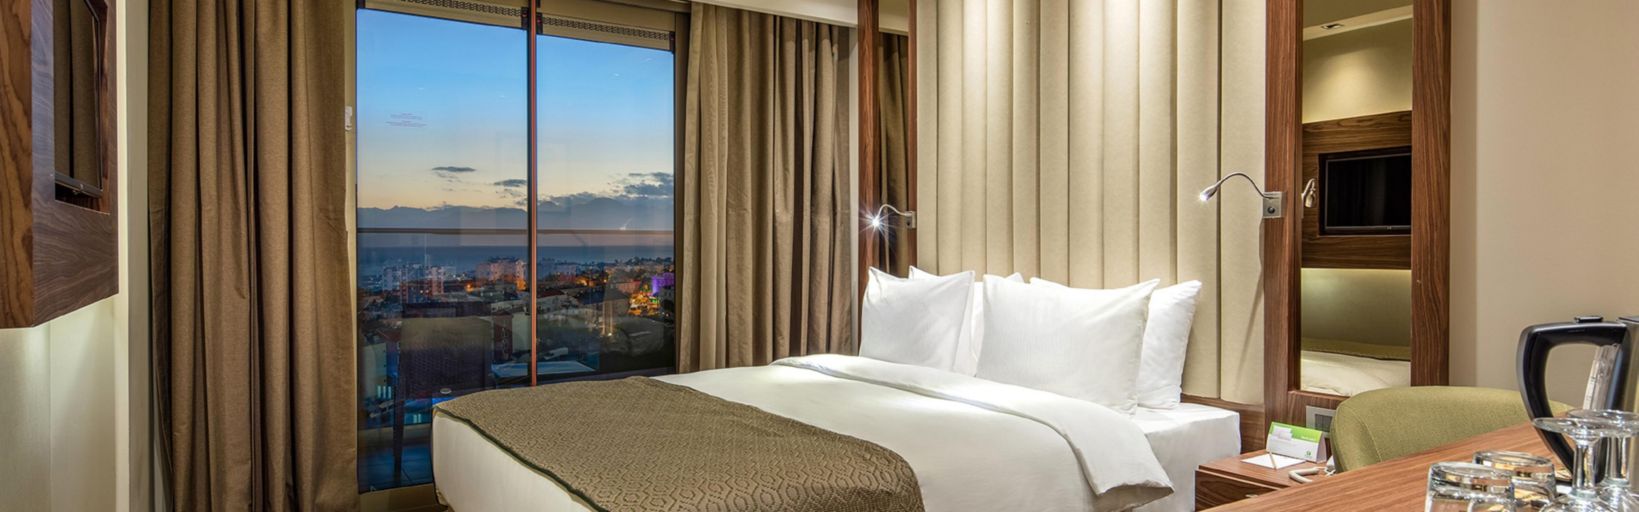 IHG Points Breaks - 100 Hotels weltweit zum Hostelpreis - Holiday Inn Antalya